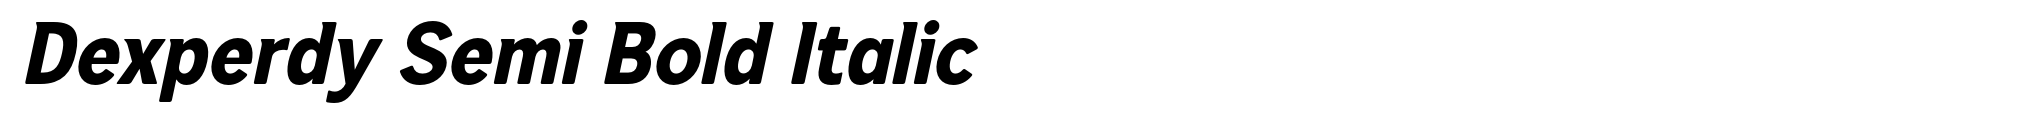 Dexperdy Semi Bold Italic image